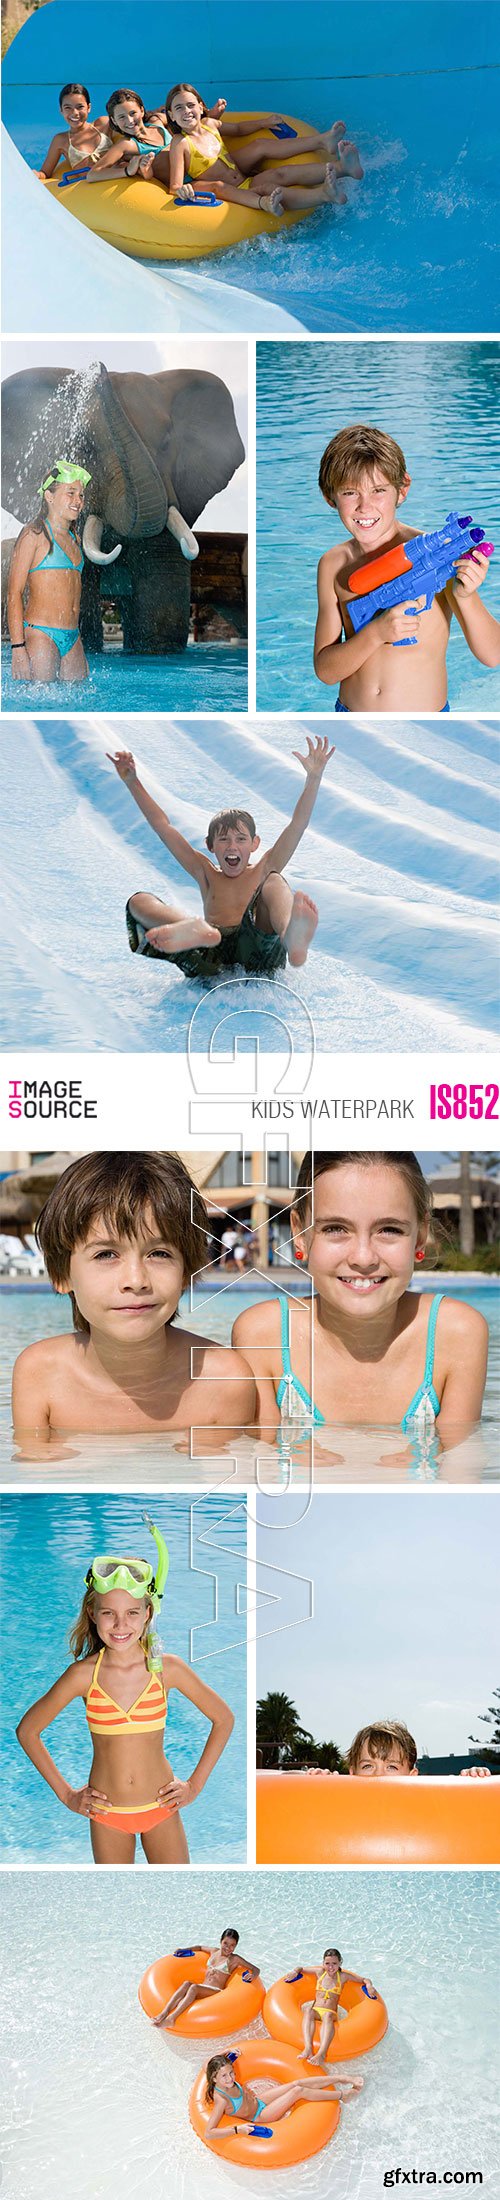 Image Source IS852 Kids Waterpark